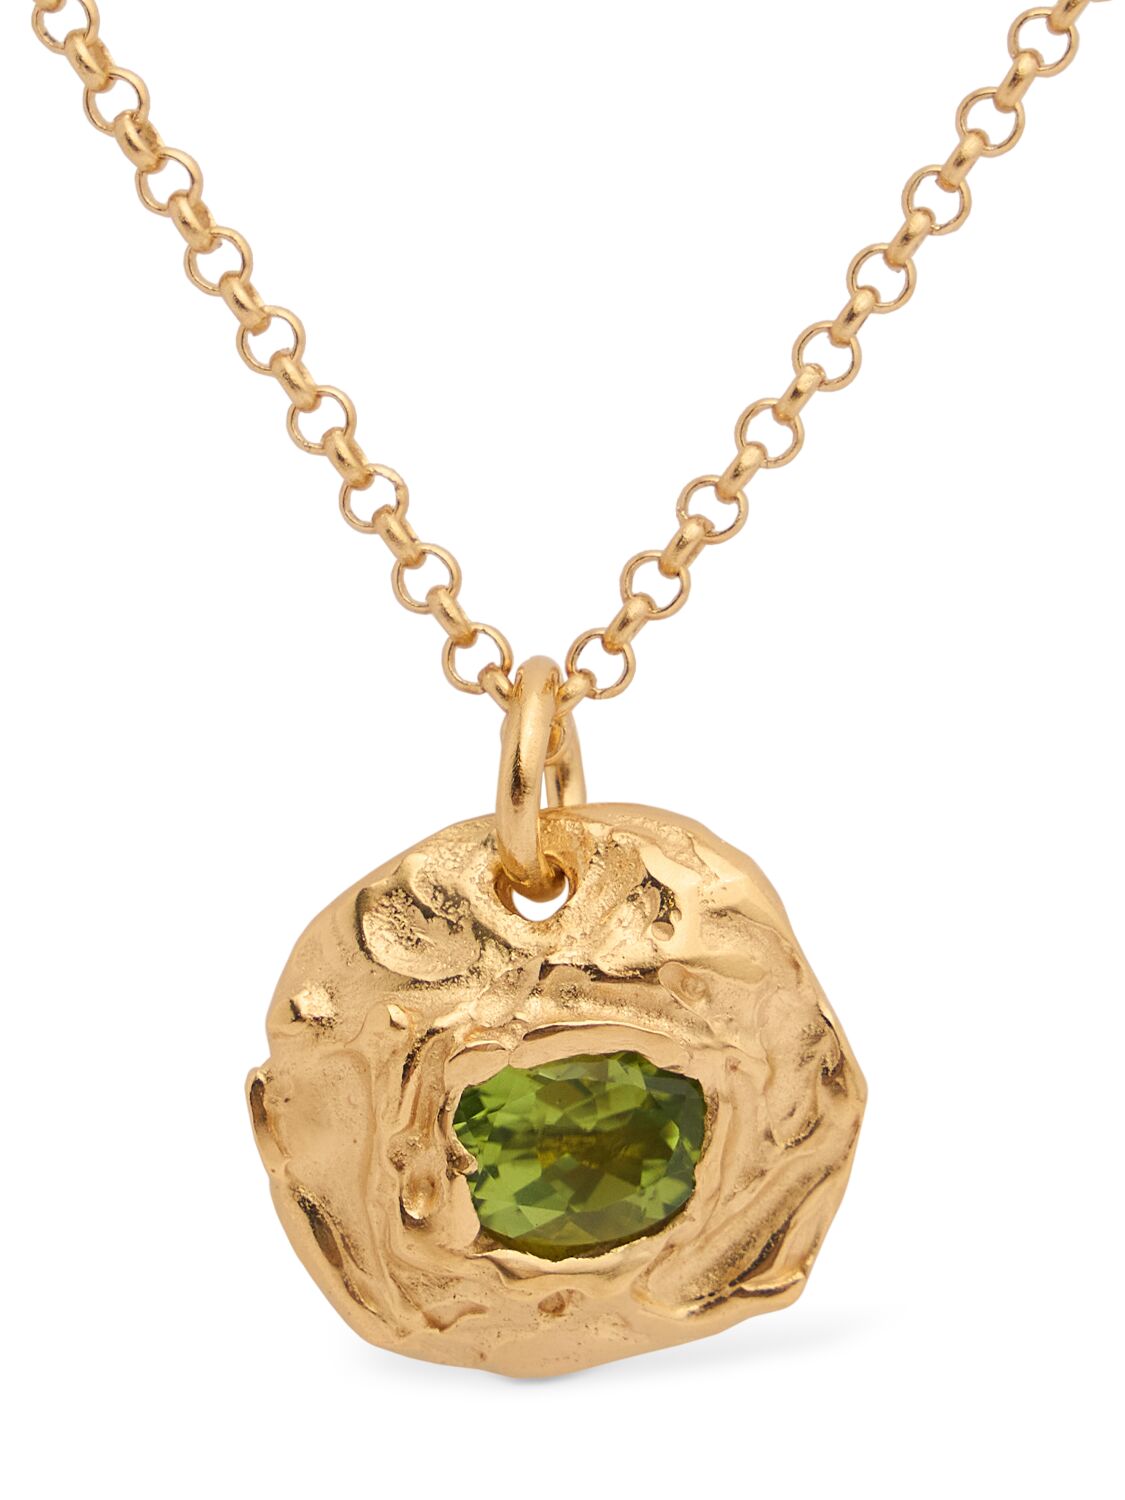 Simuero Illetes Pendant Necklace In Gold